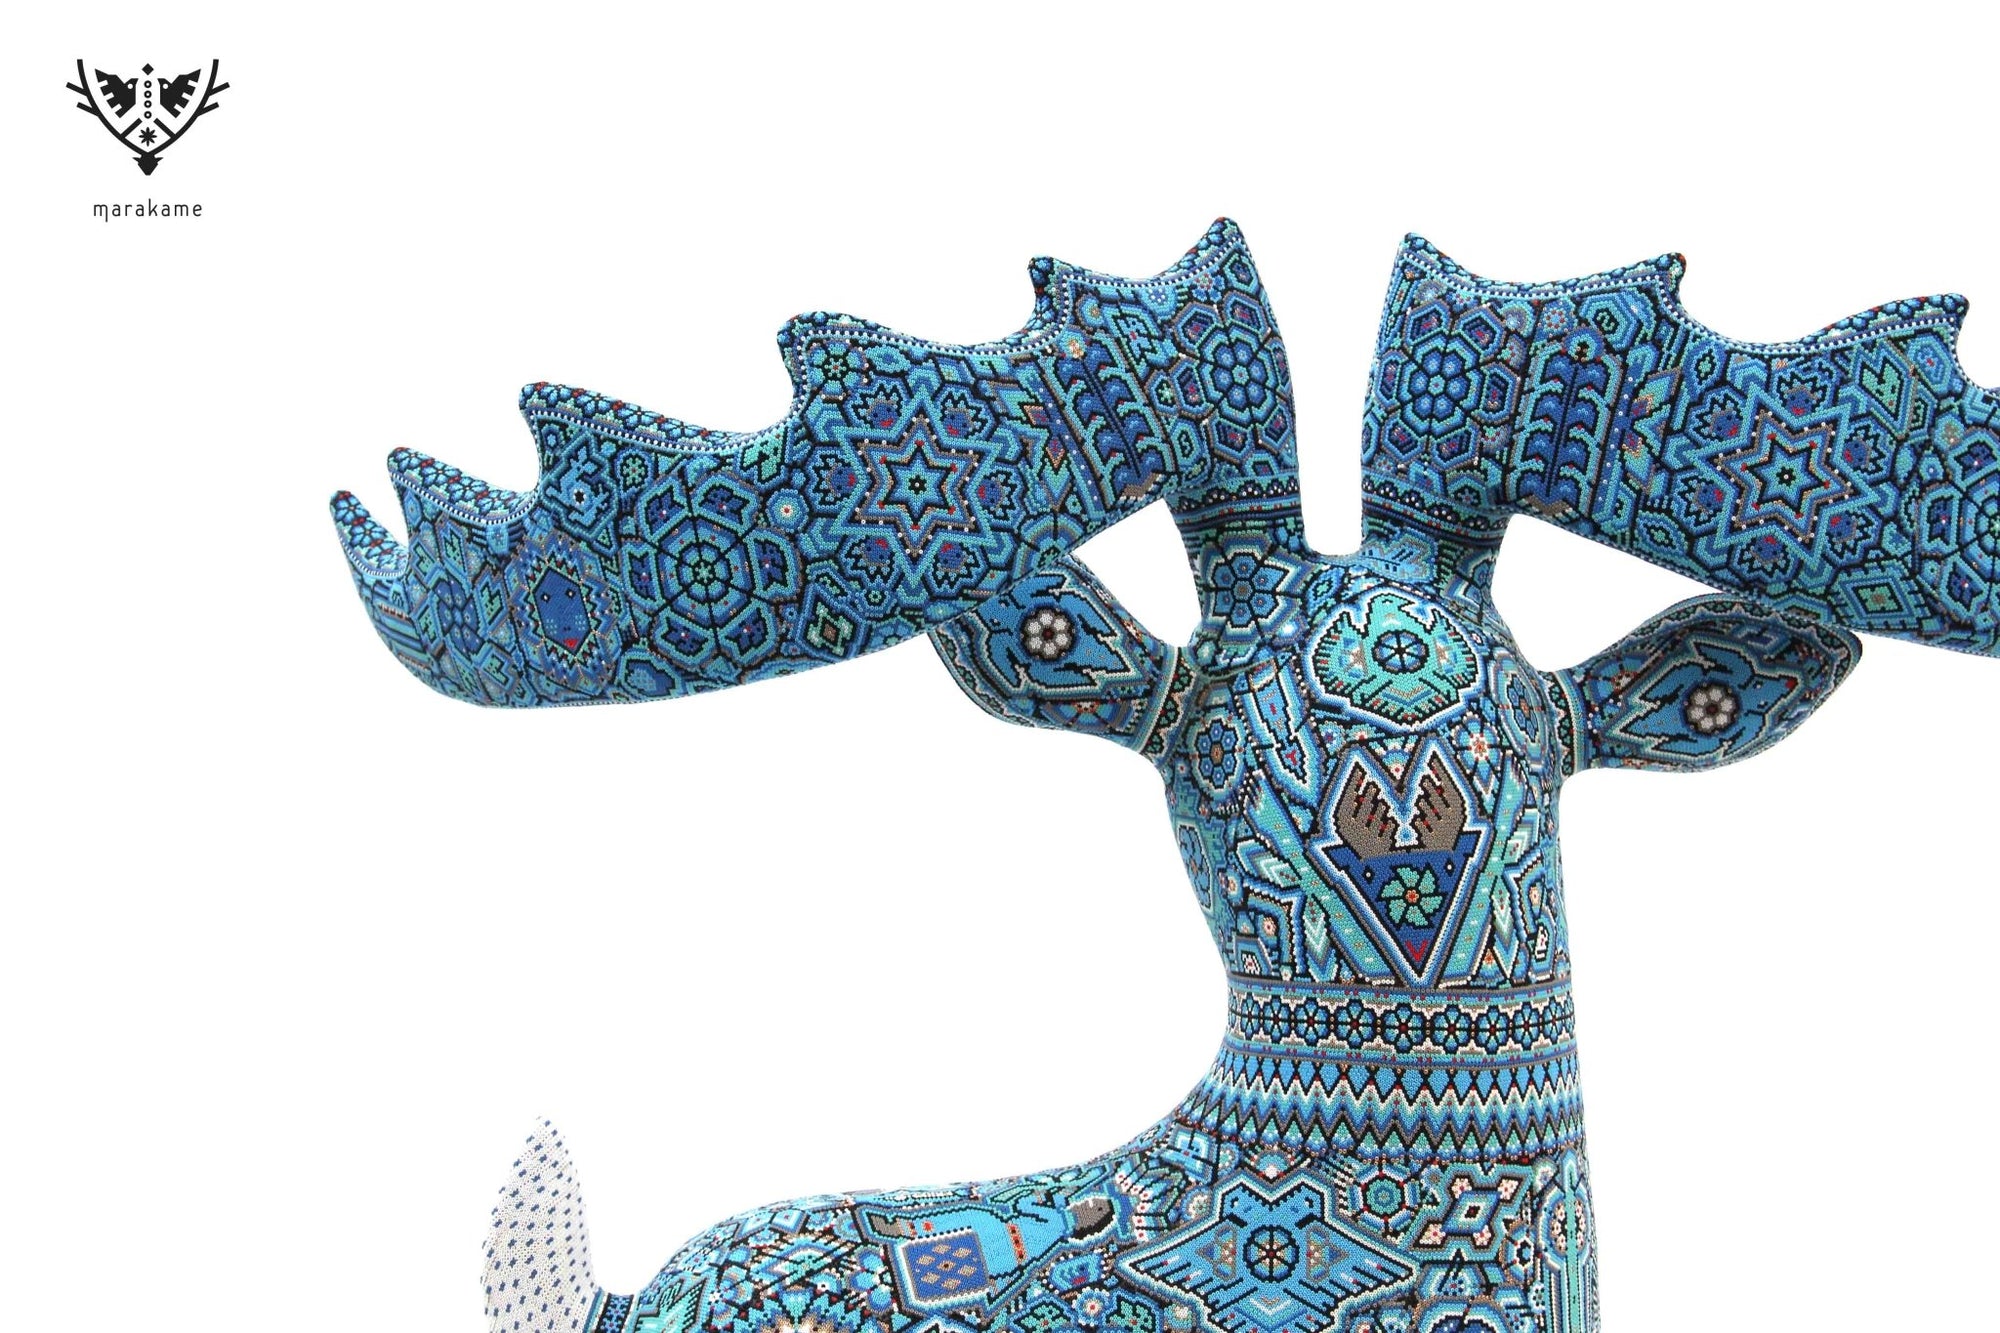 Huichol Deer Art Sculpture - Kauyumari - Huichol Art - Marakame